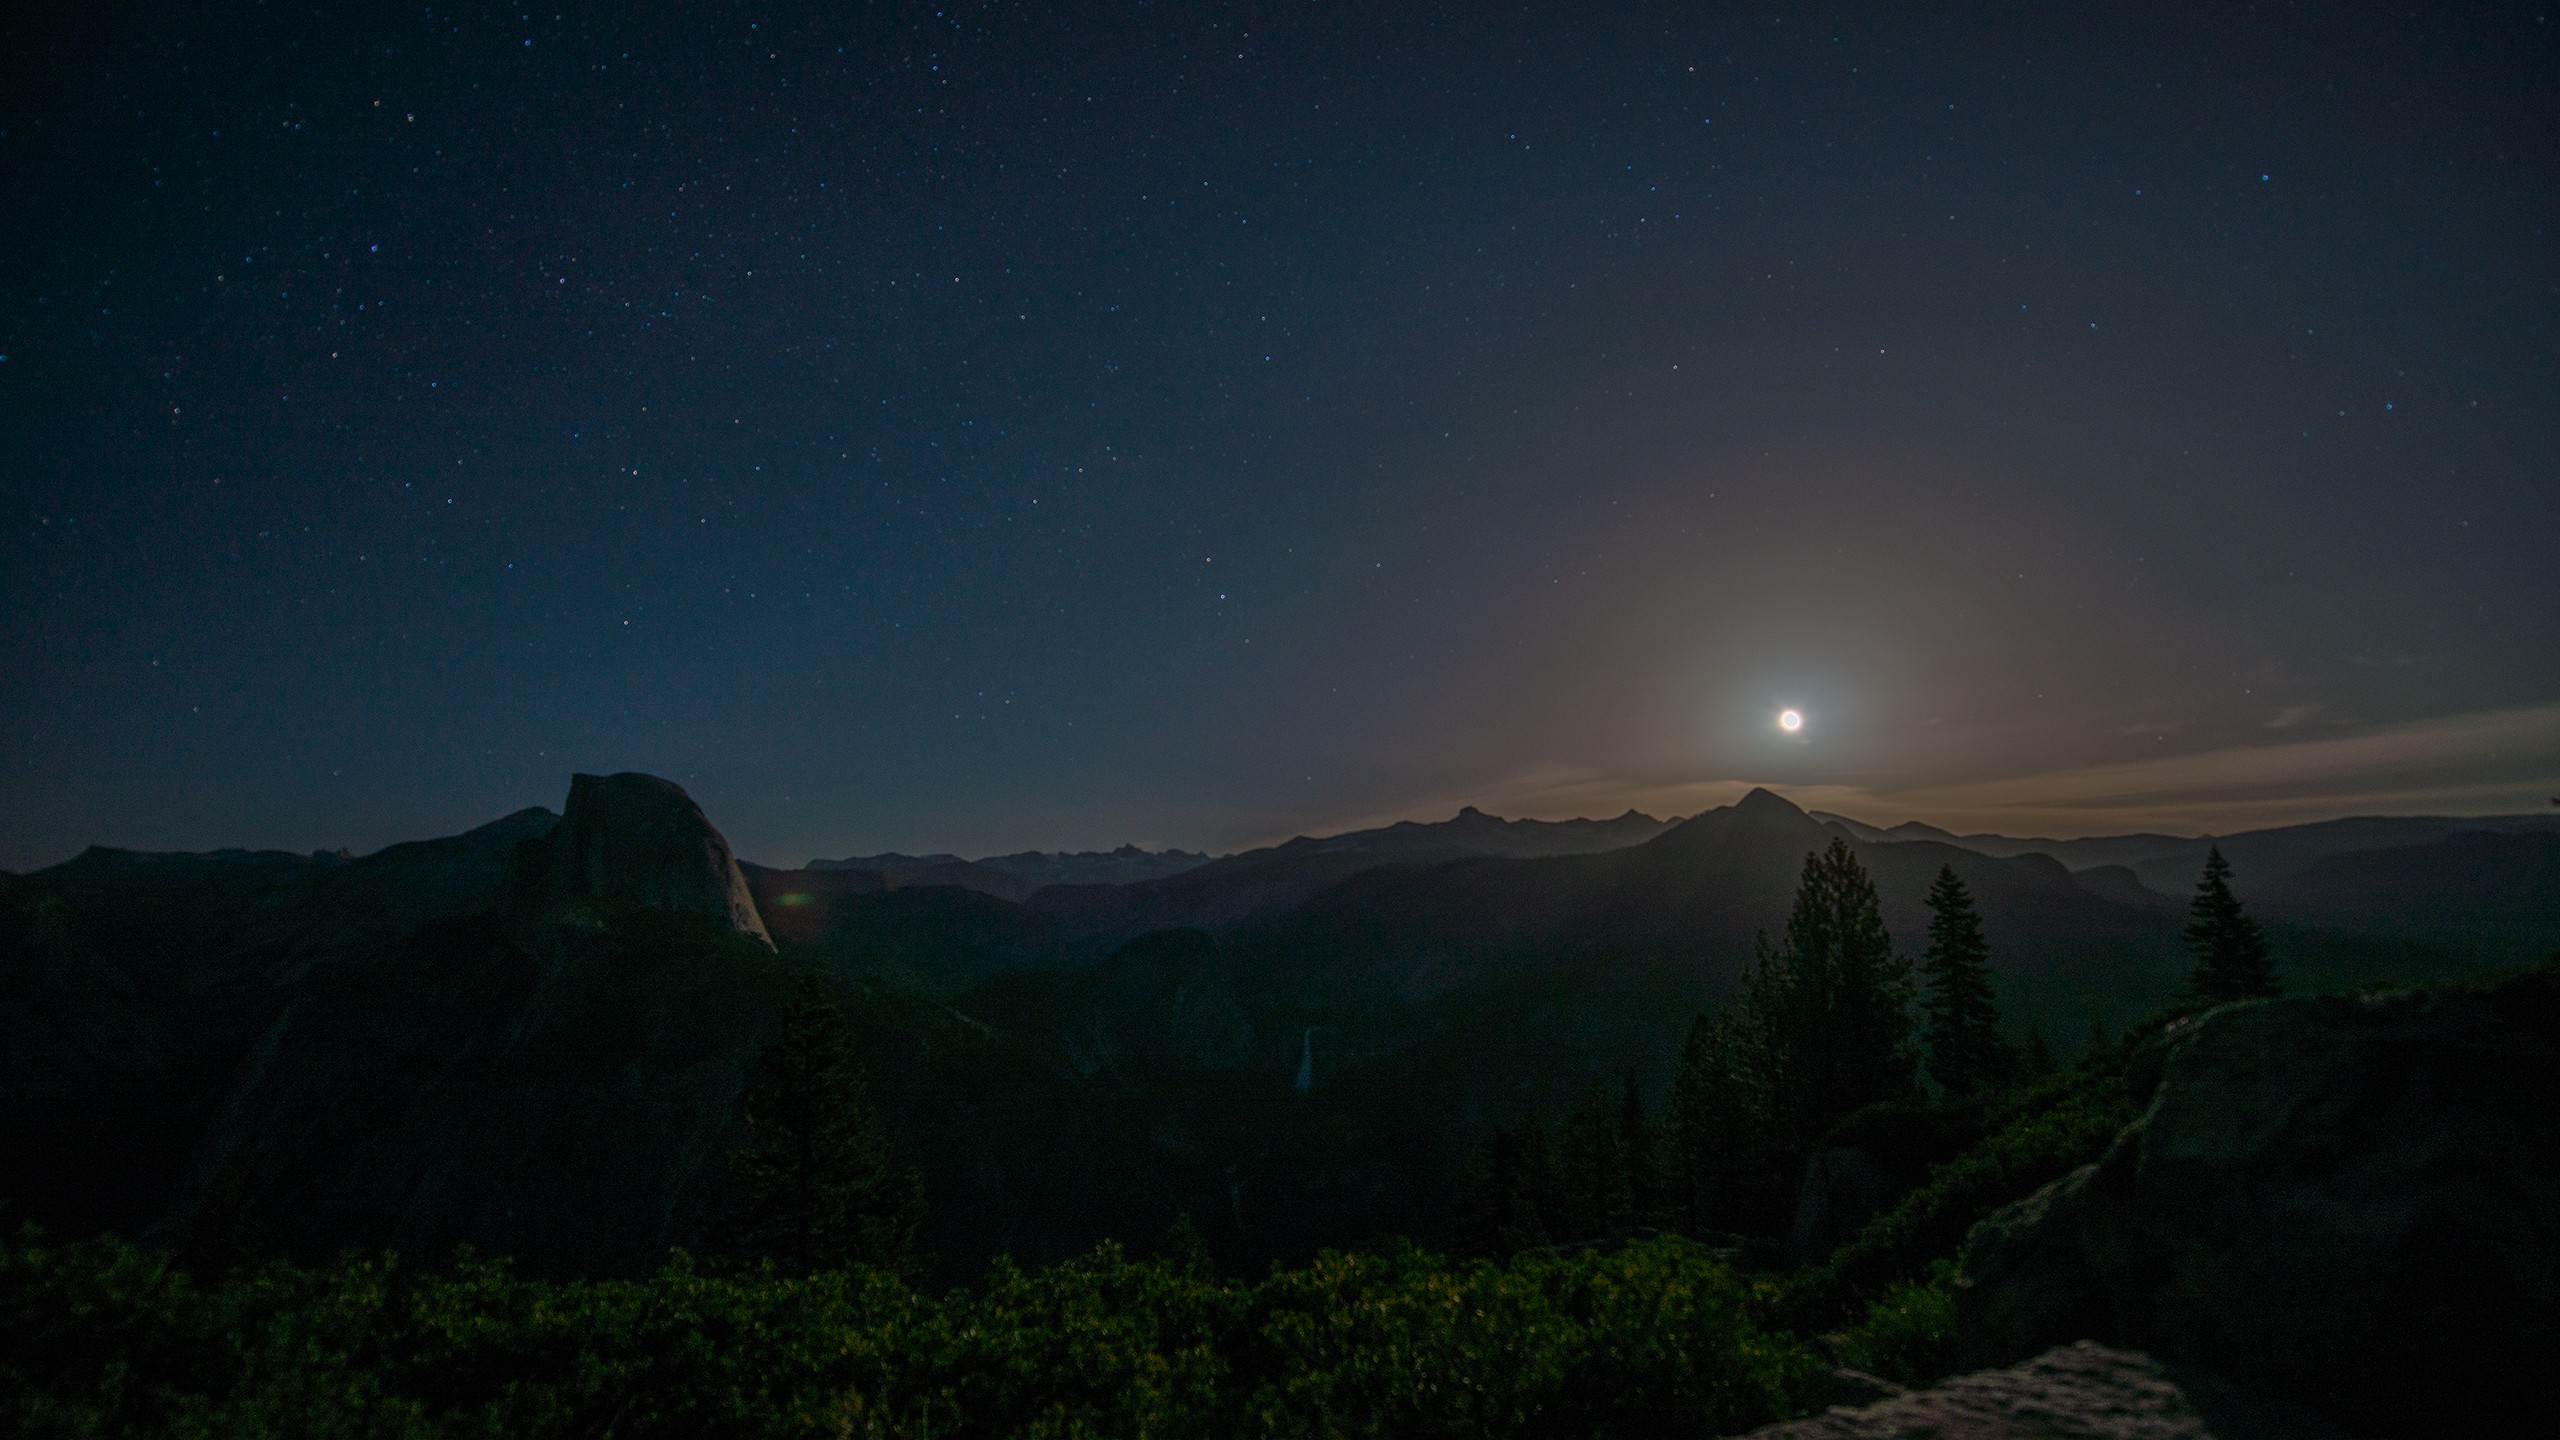 General 2560x1440 landscape nature night sky sky California USA Yosemite Valley stars low light